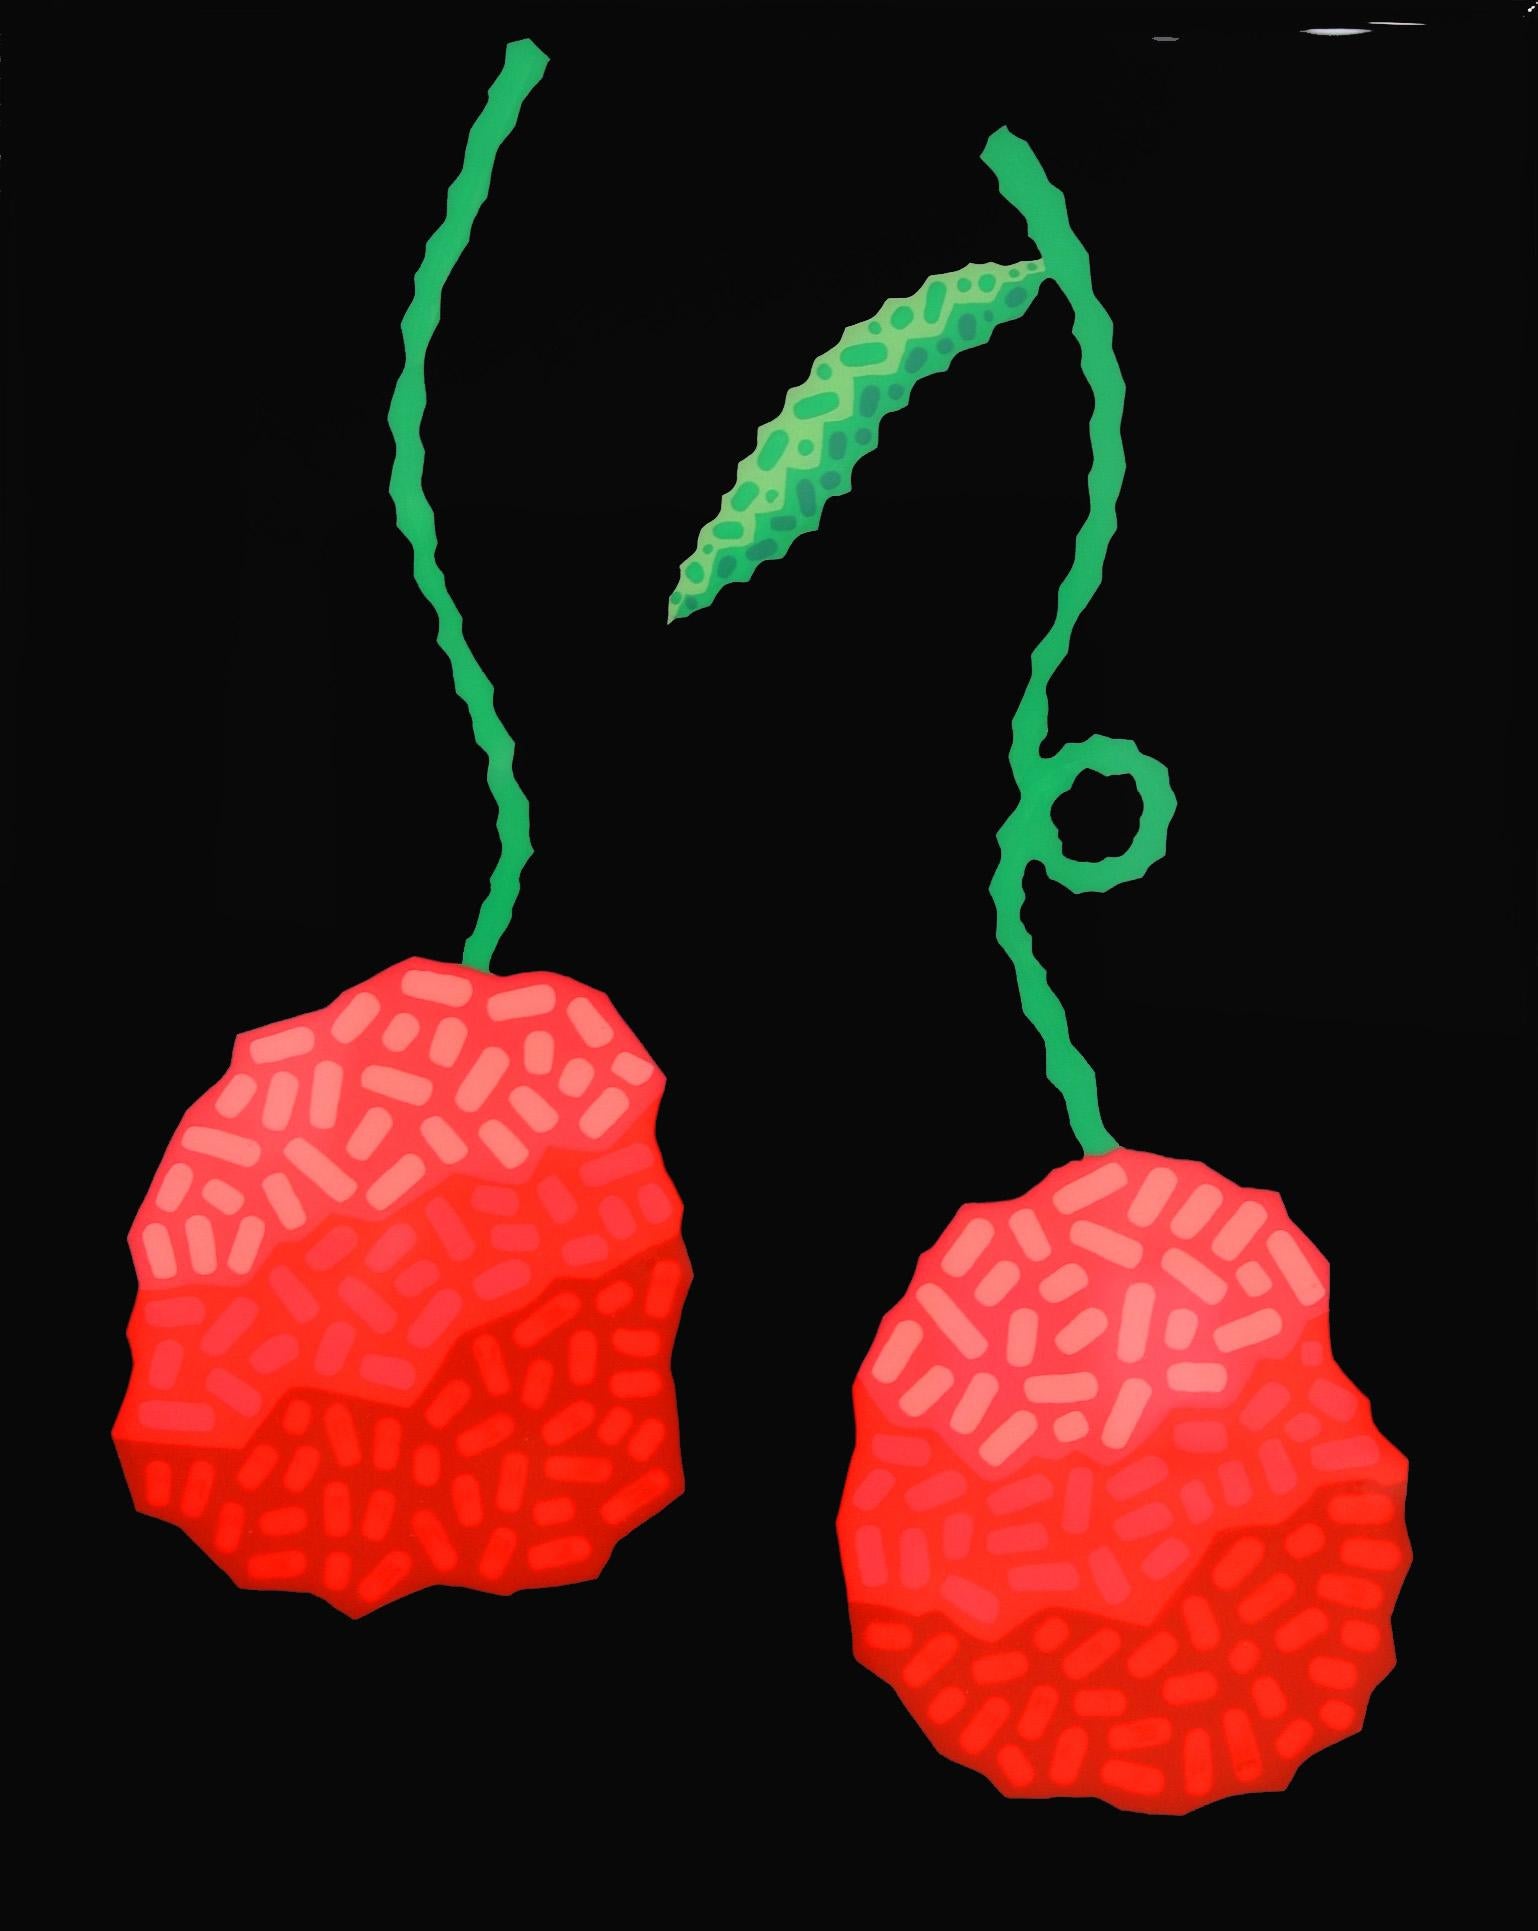 Black Cherries - Vibrant Red Fruit Southwest Inspired Pop Art Food Painting